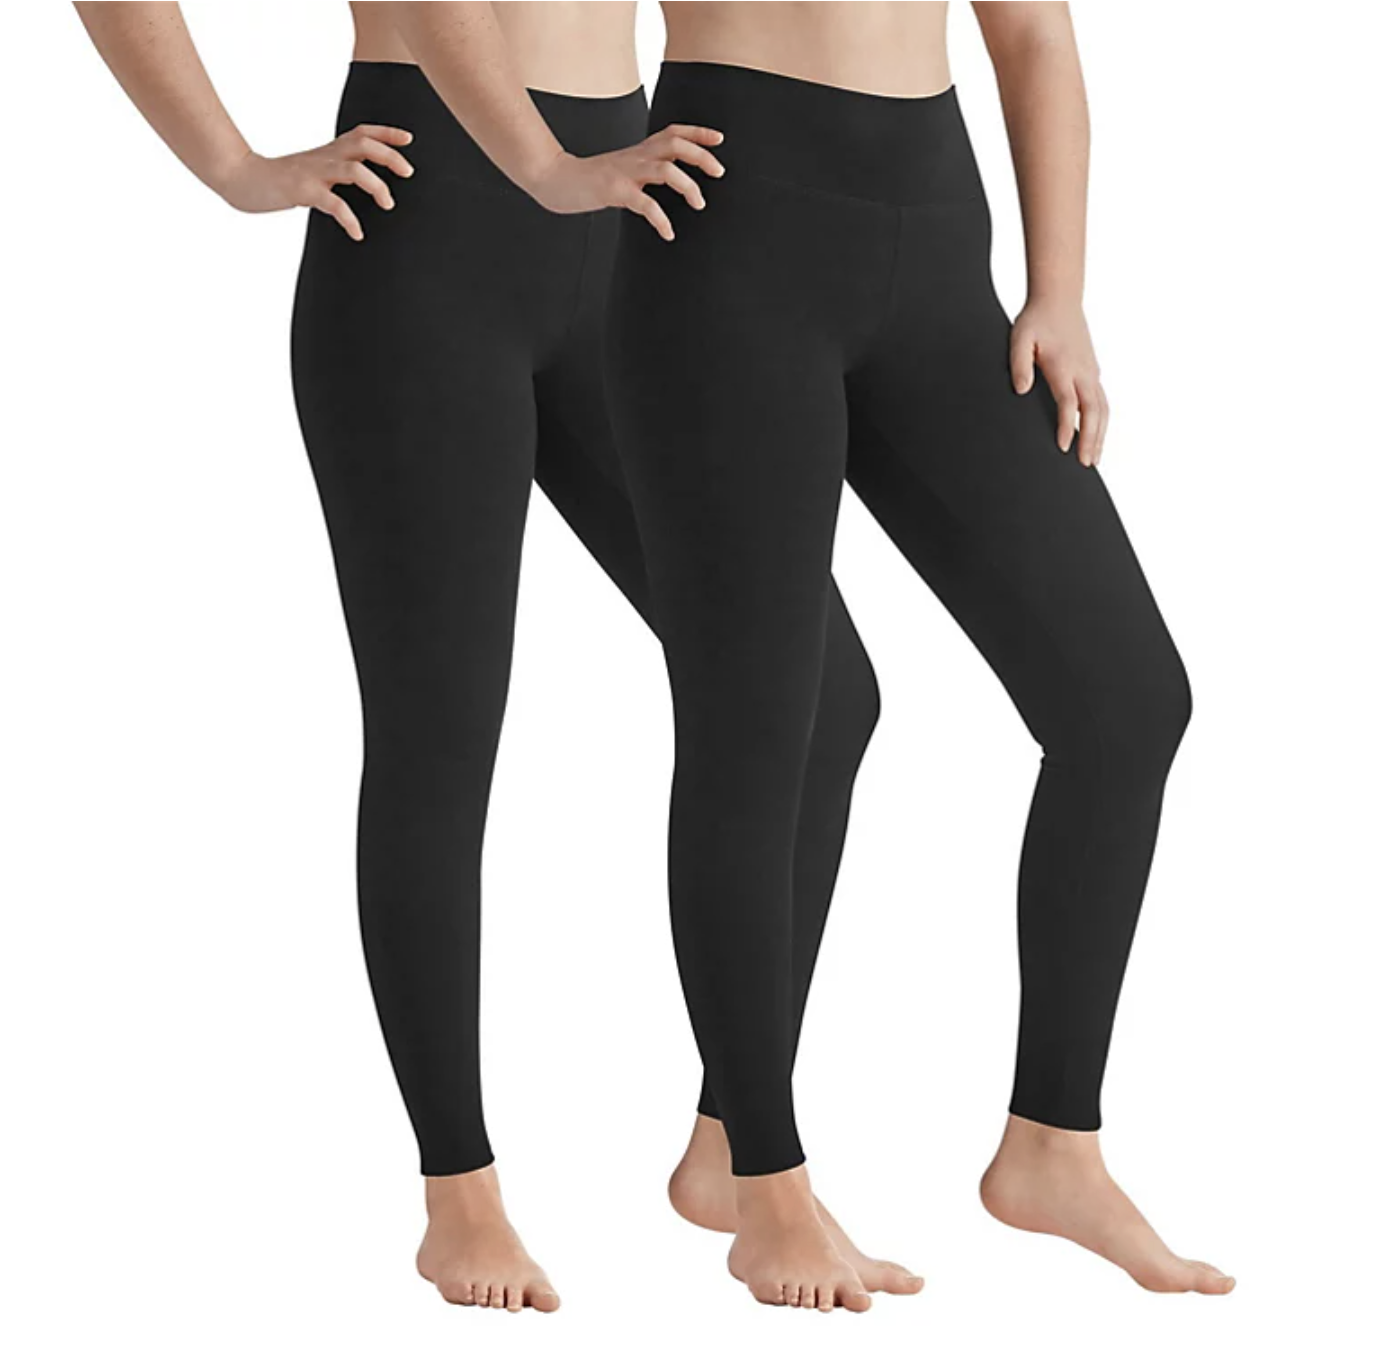 two people wearing the leggings